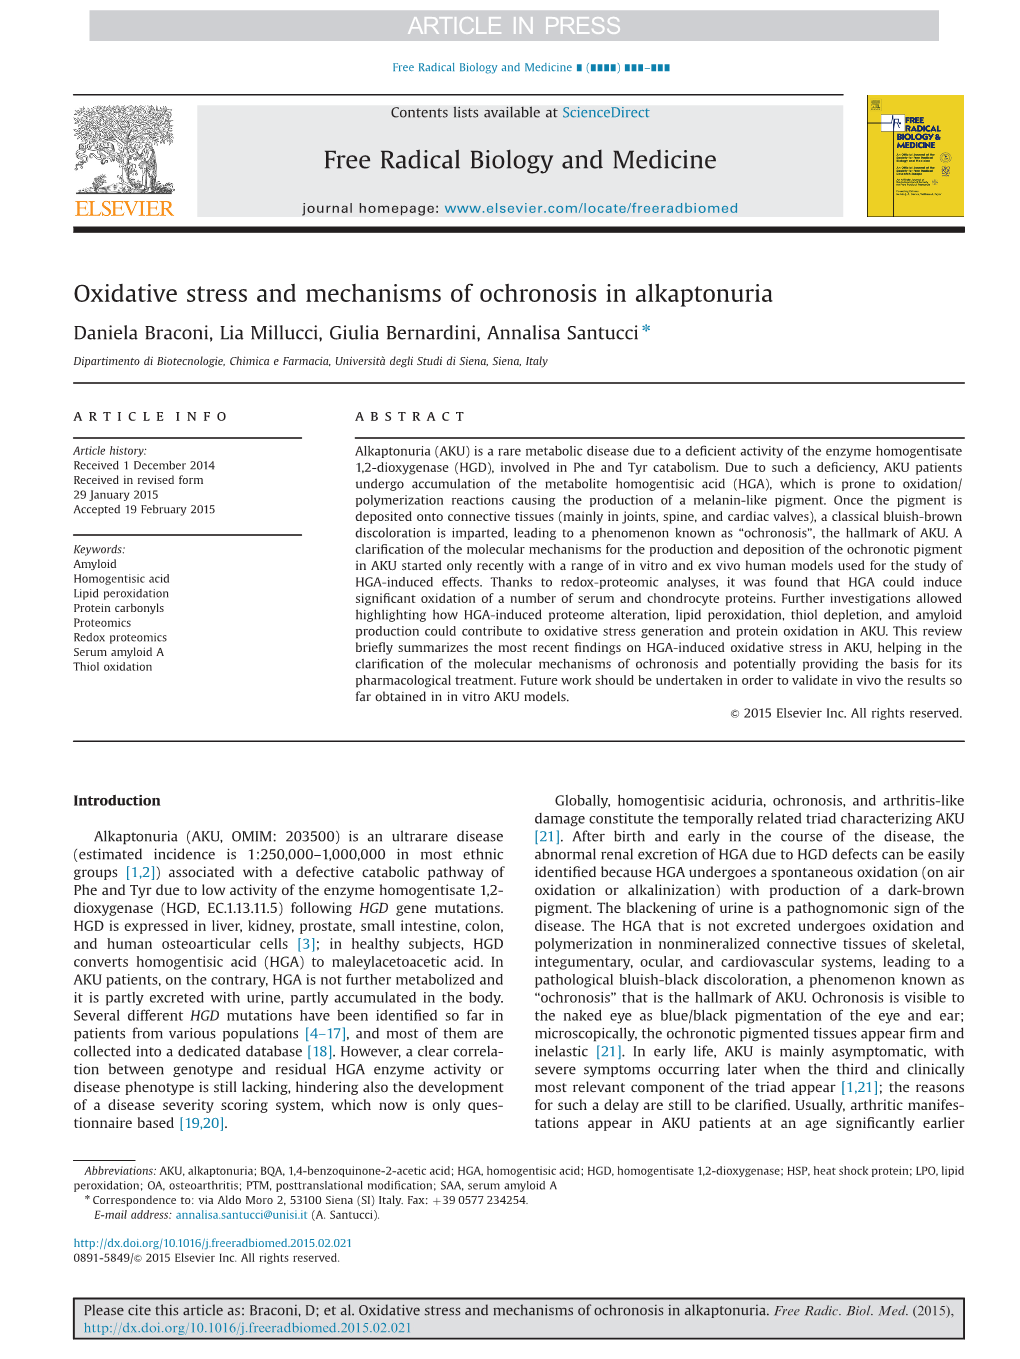 Oxidative Stress and Mechanisms of Ochronosis in Alkaptonuria